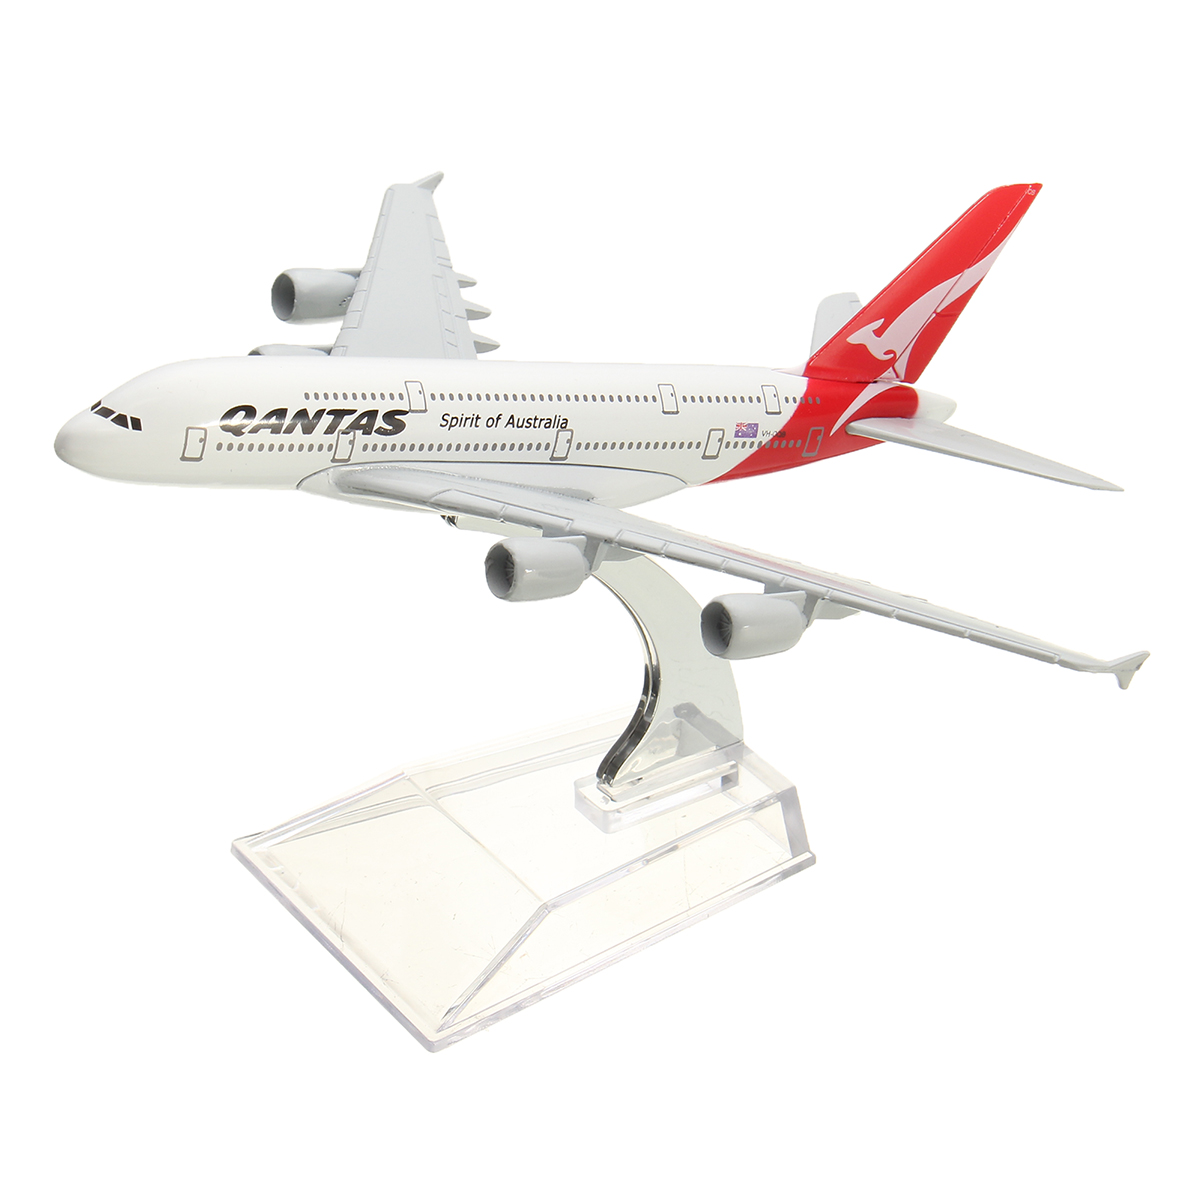 16cm-Airplane-Metal-Plane-Model-Aircraft-A380-AUSTRALIA-QANTAS-Aeroplane-Scale-Desk-Toy-1098494